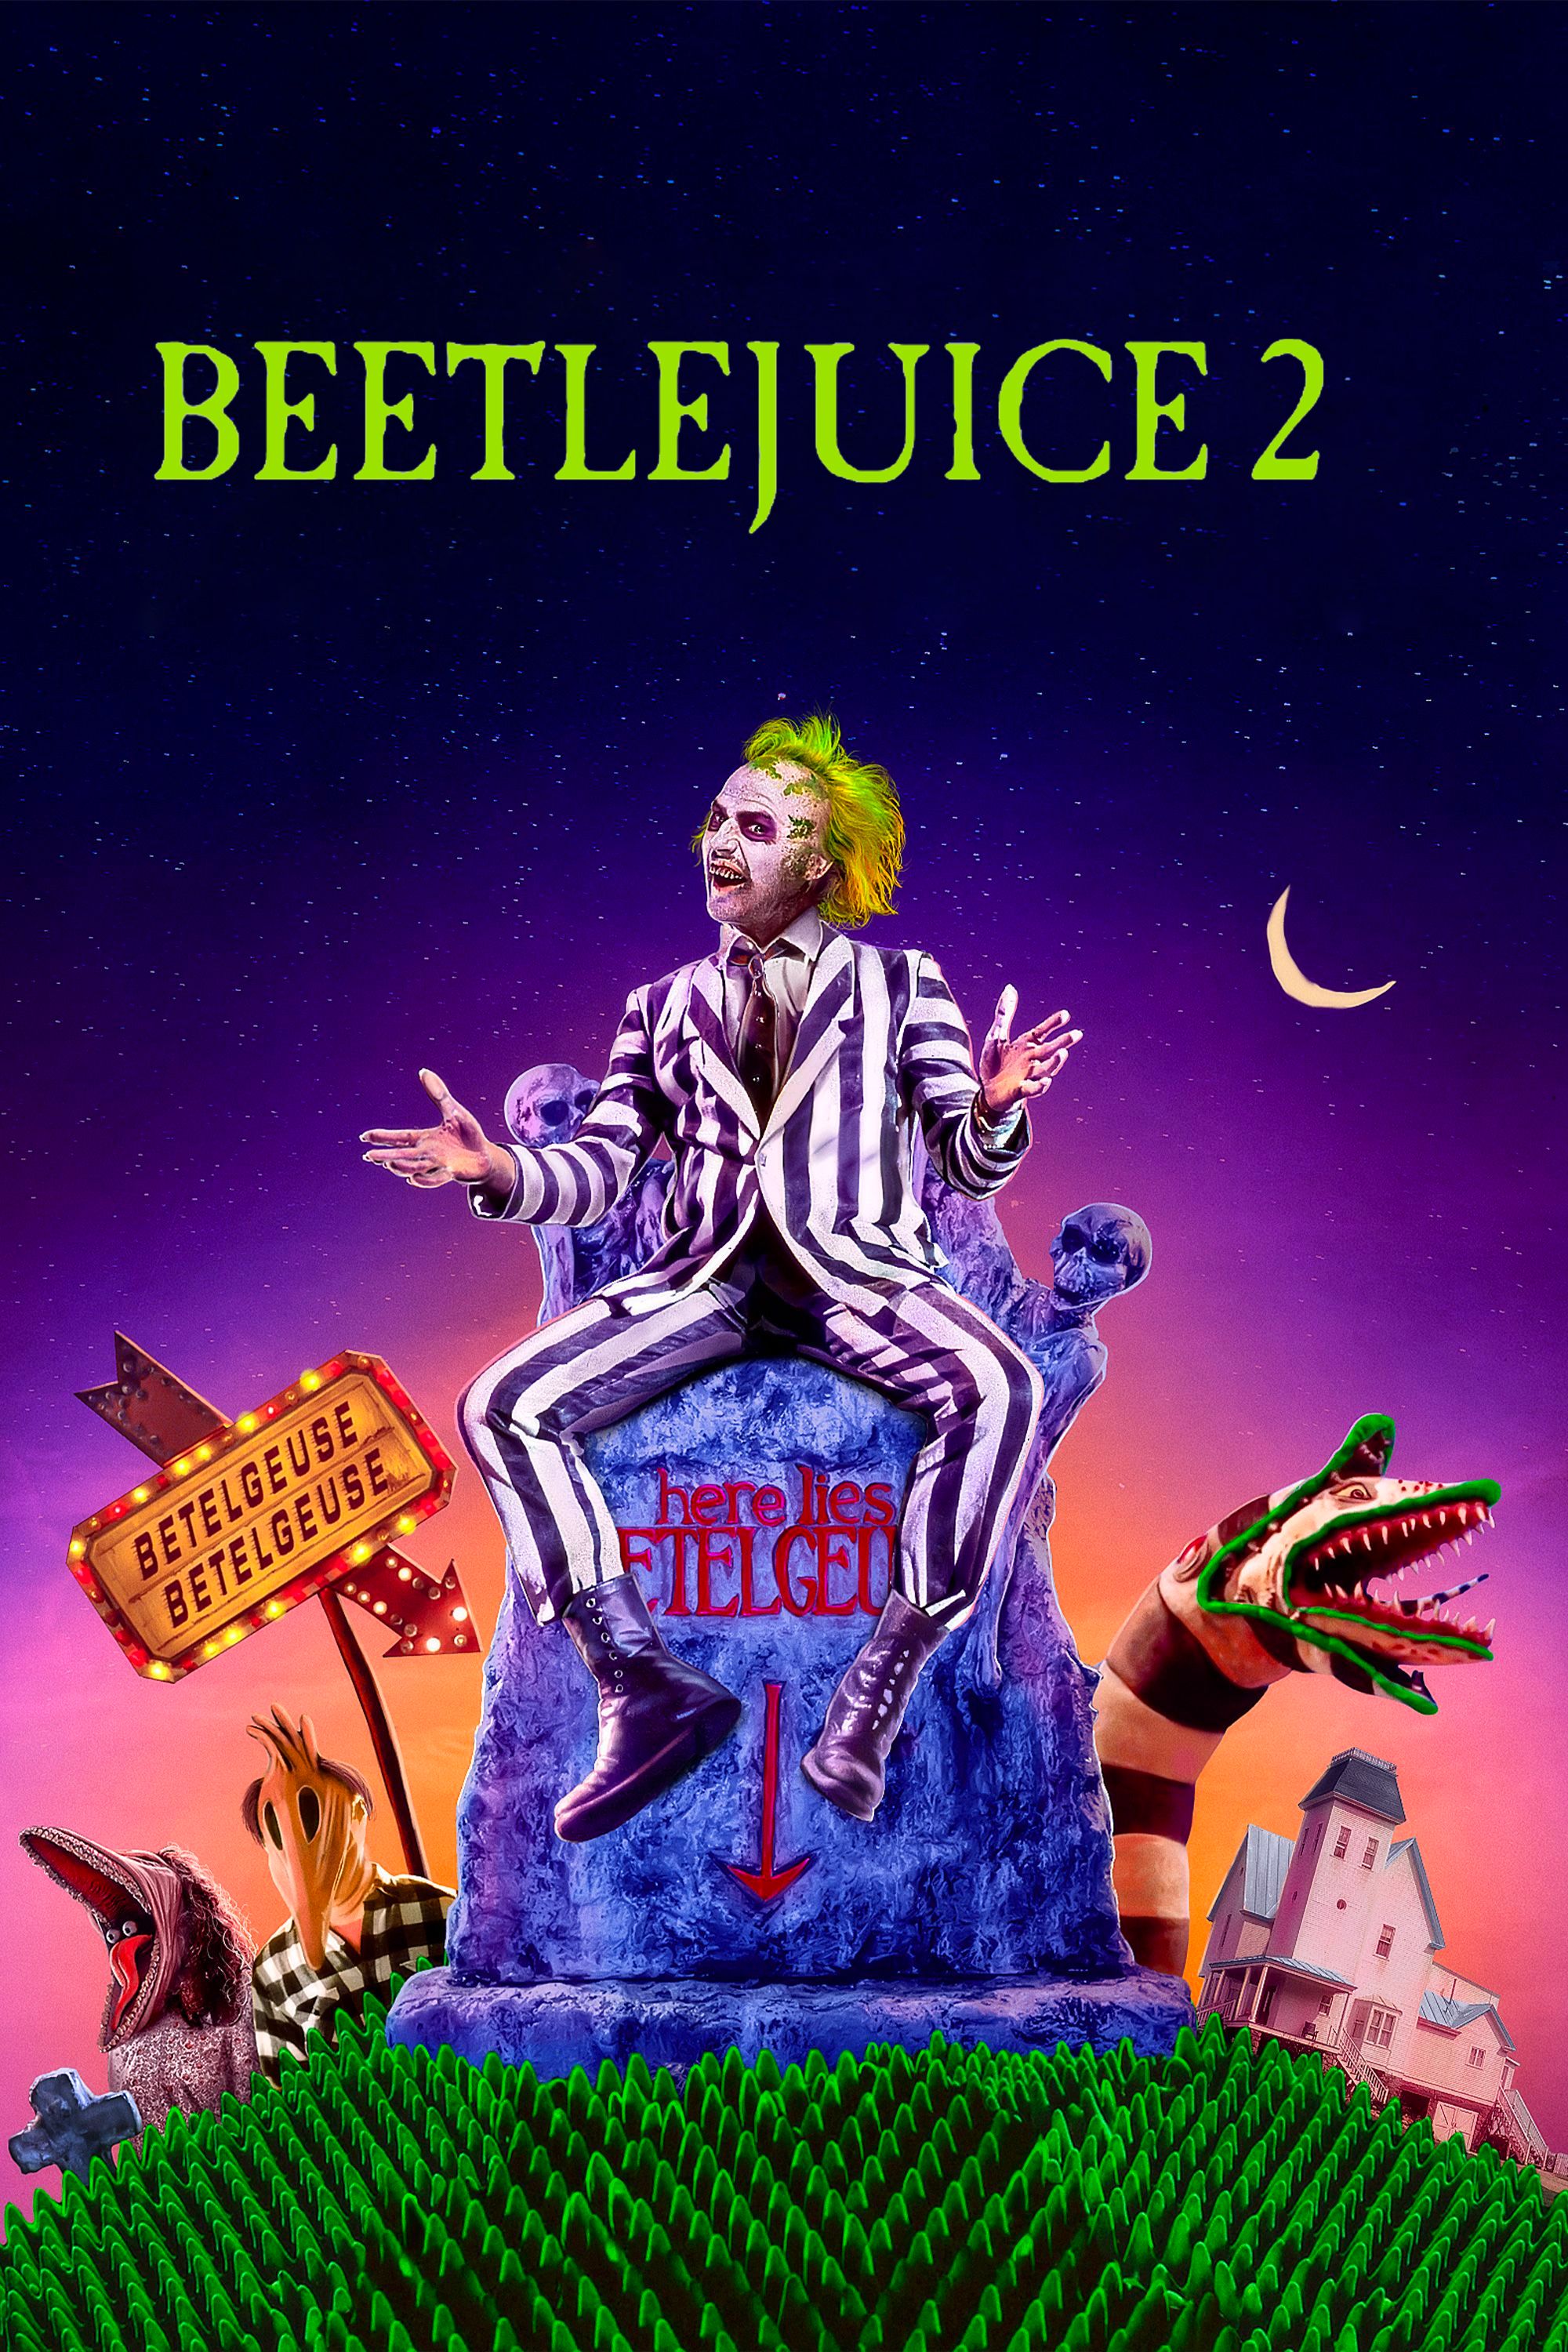 Tim Burton addresses “Surreal” U.K. Politics; 'Beetlejuice 2' & why 'Dumbo'  will likely be his last film with Disney – Lumière Festival Tim Burton  jamboree continues – Deadline